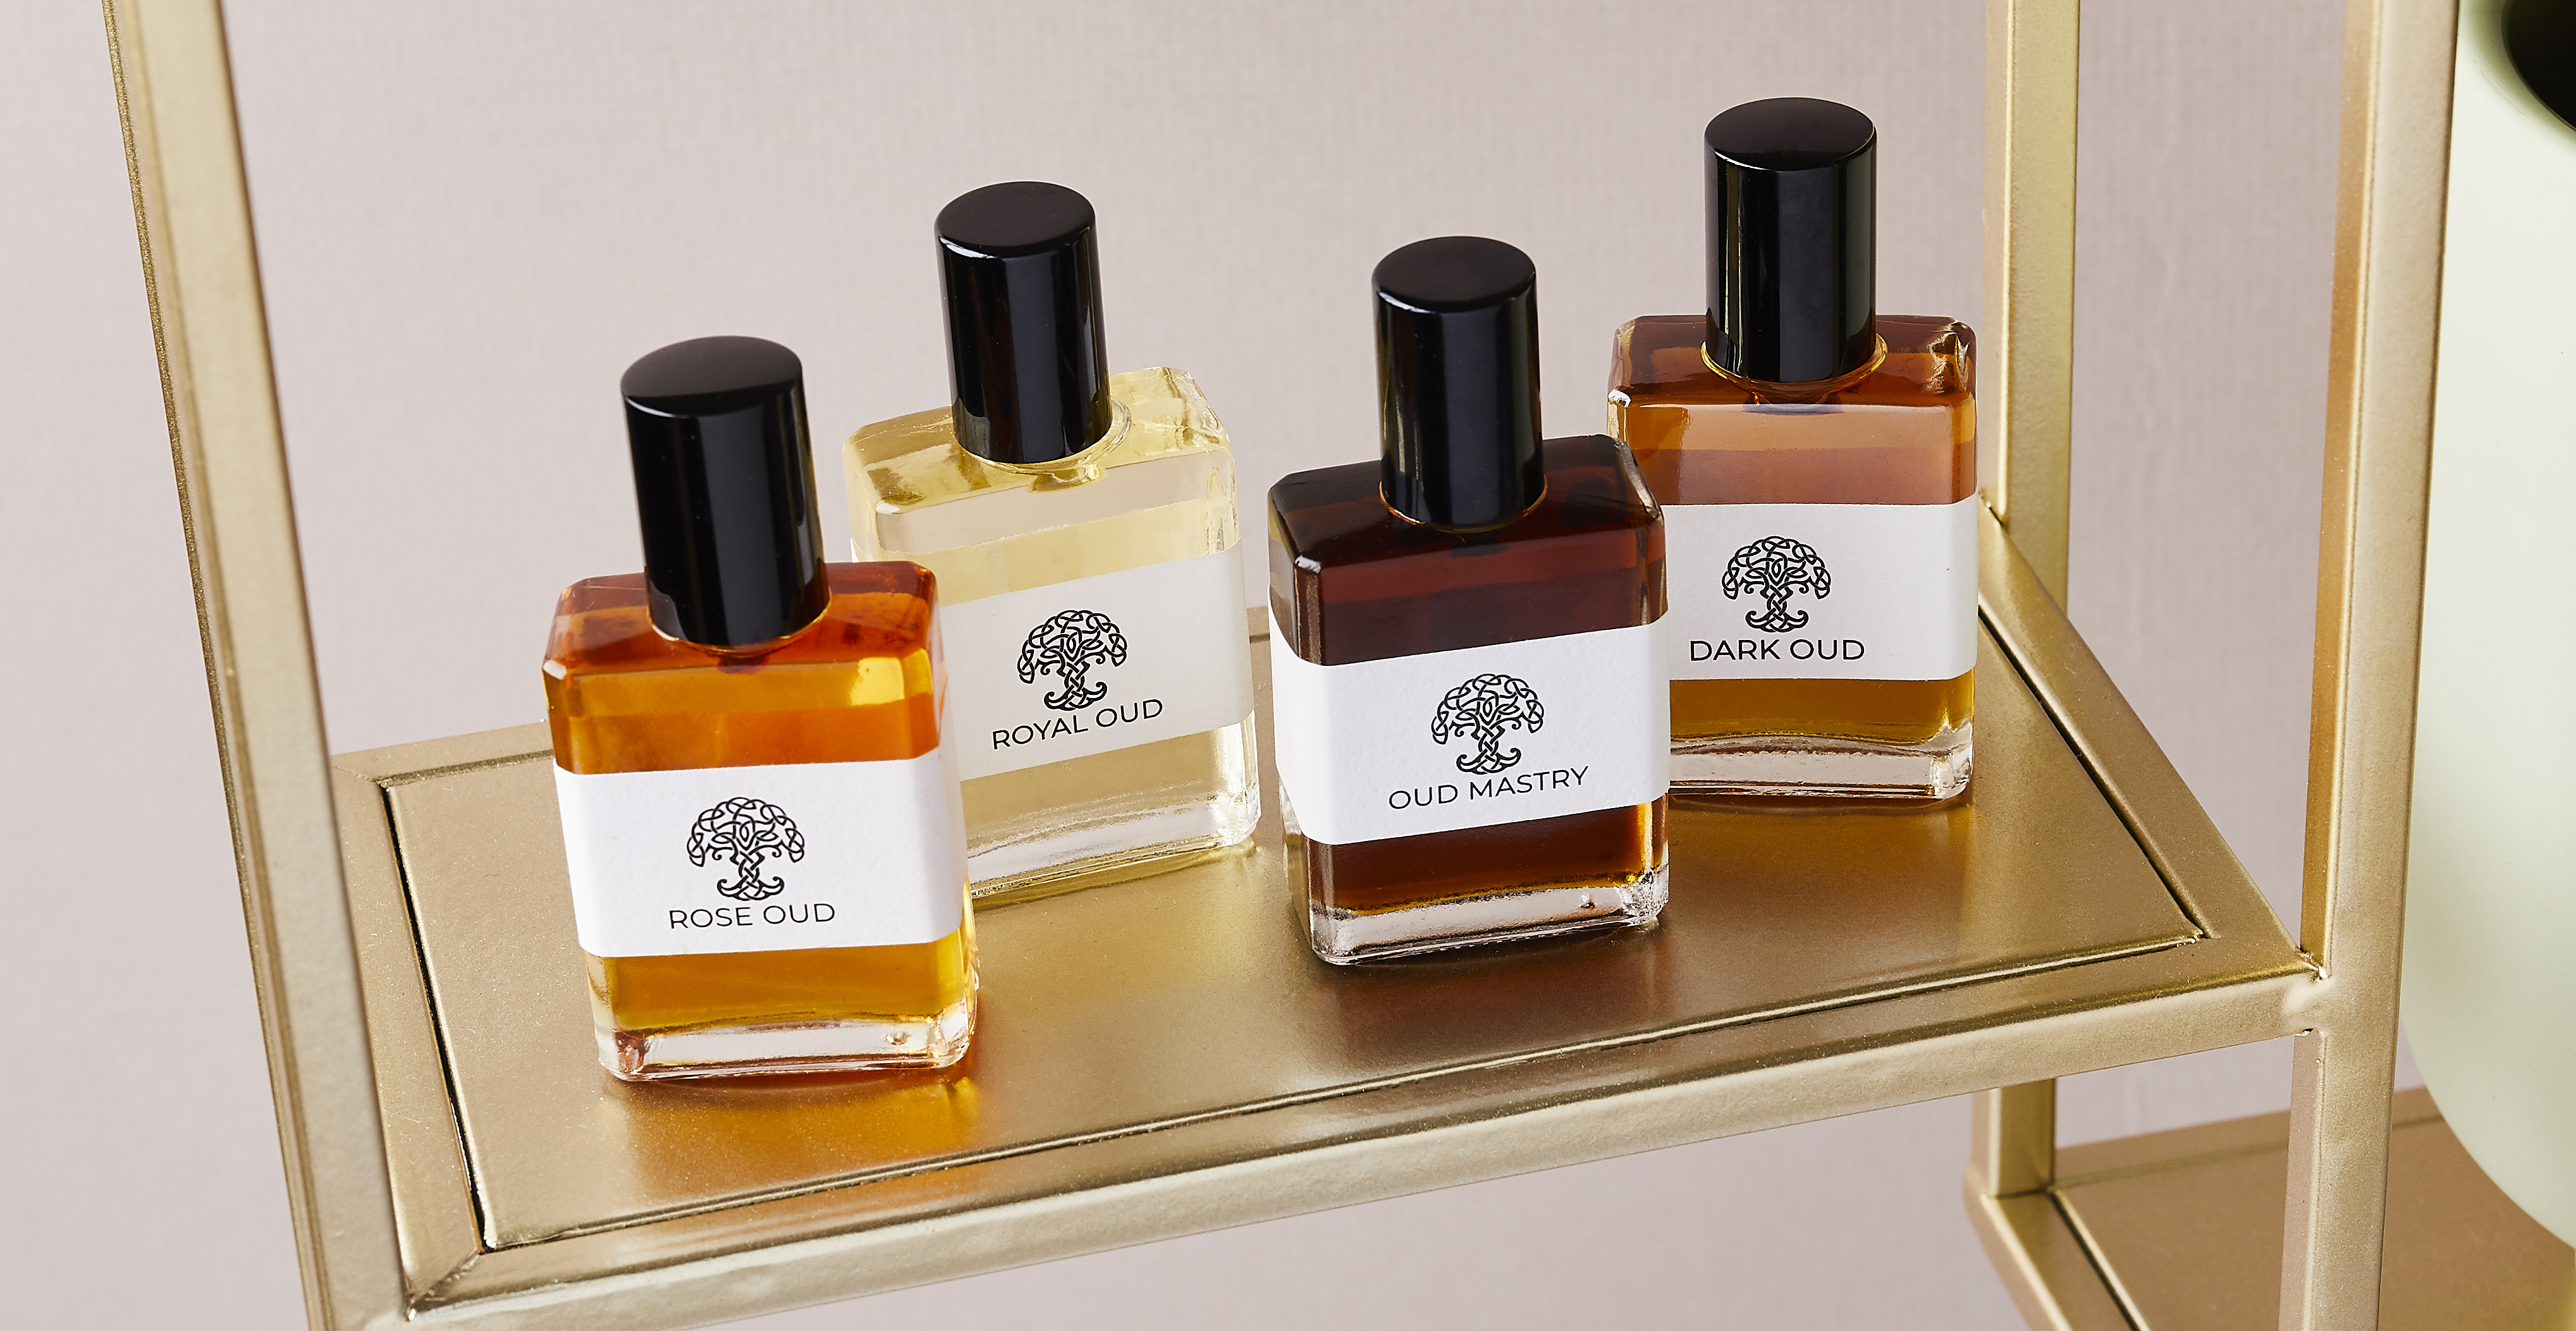 Where should you store perfume?